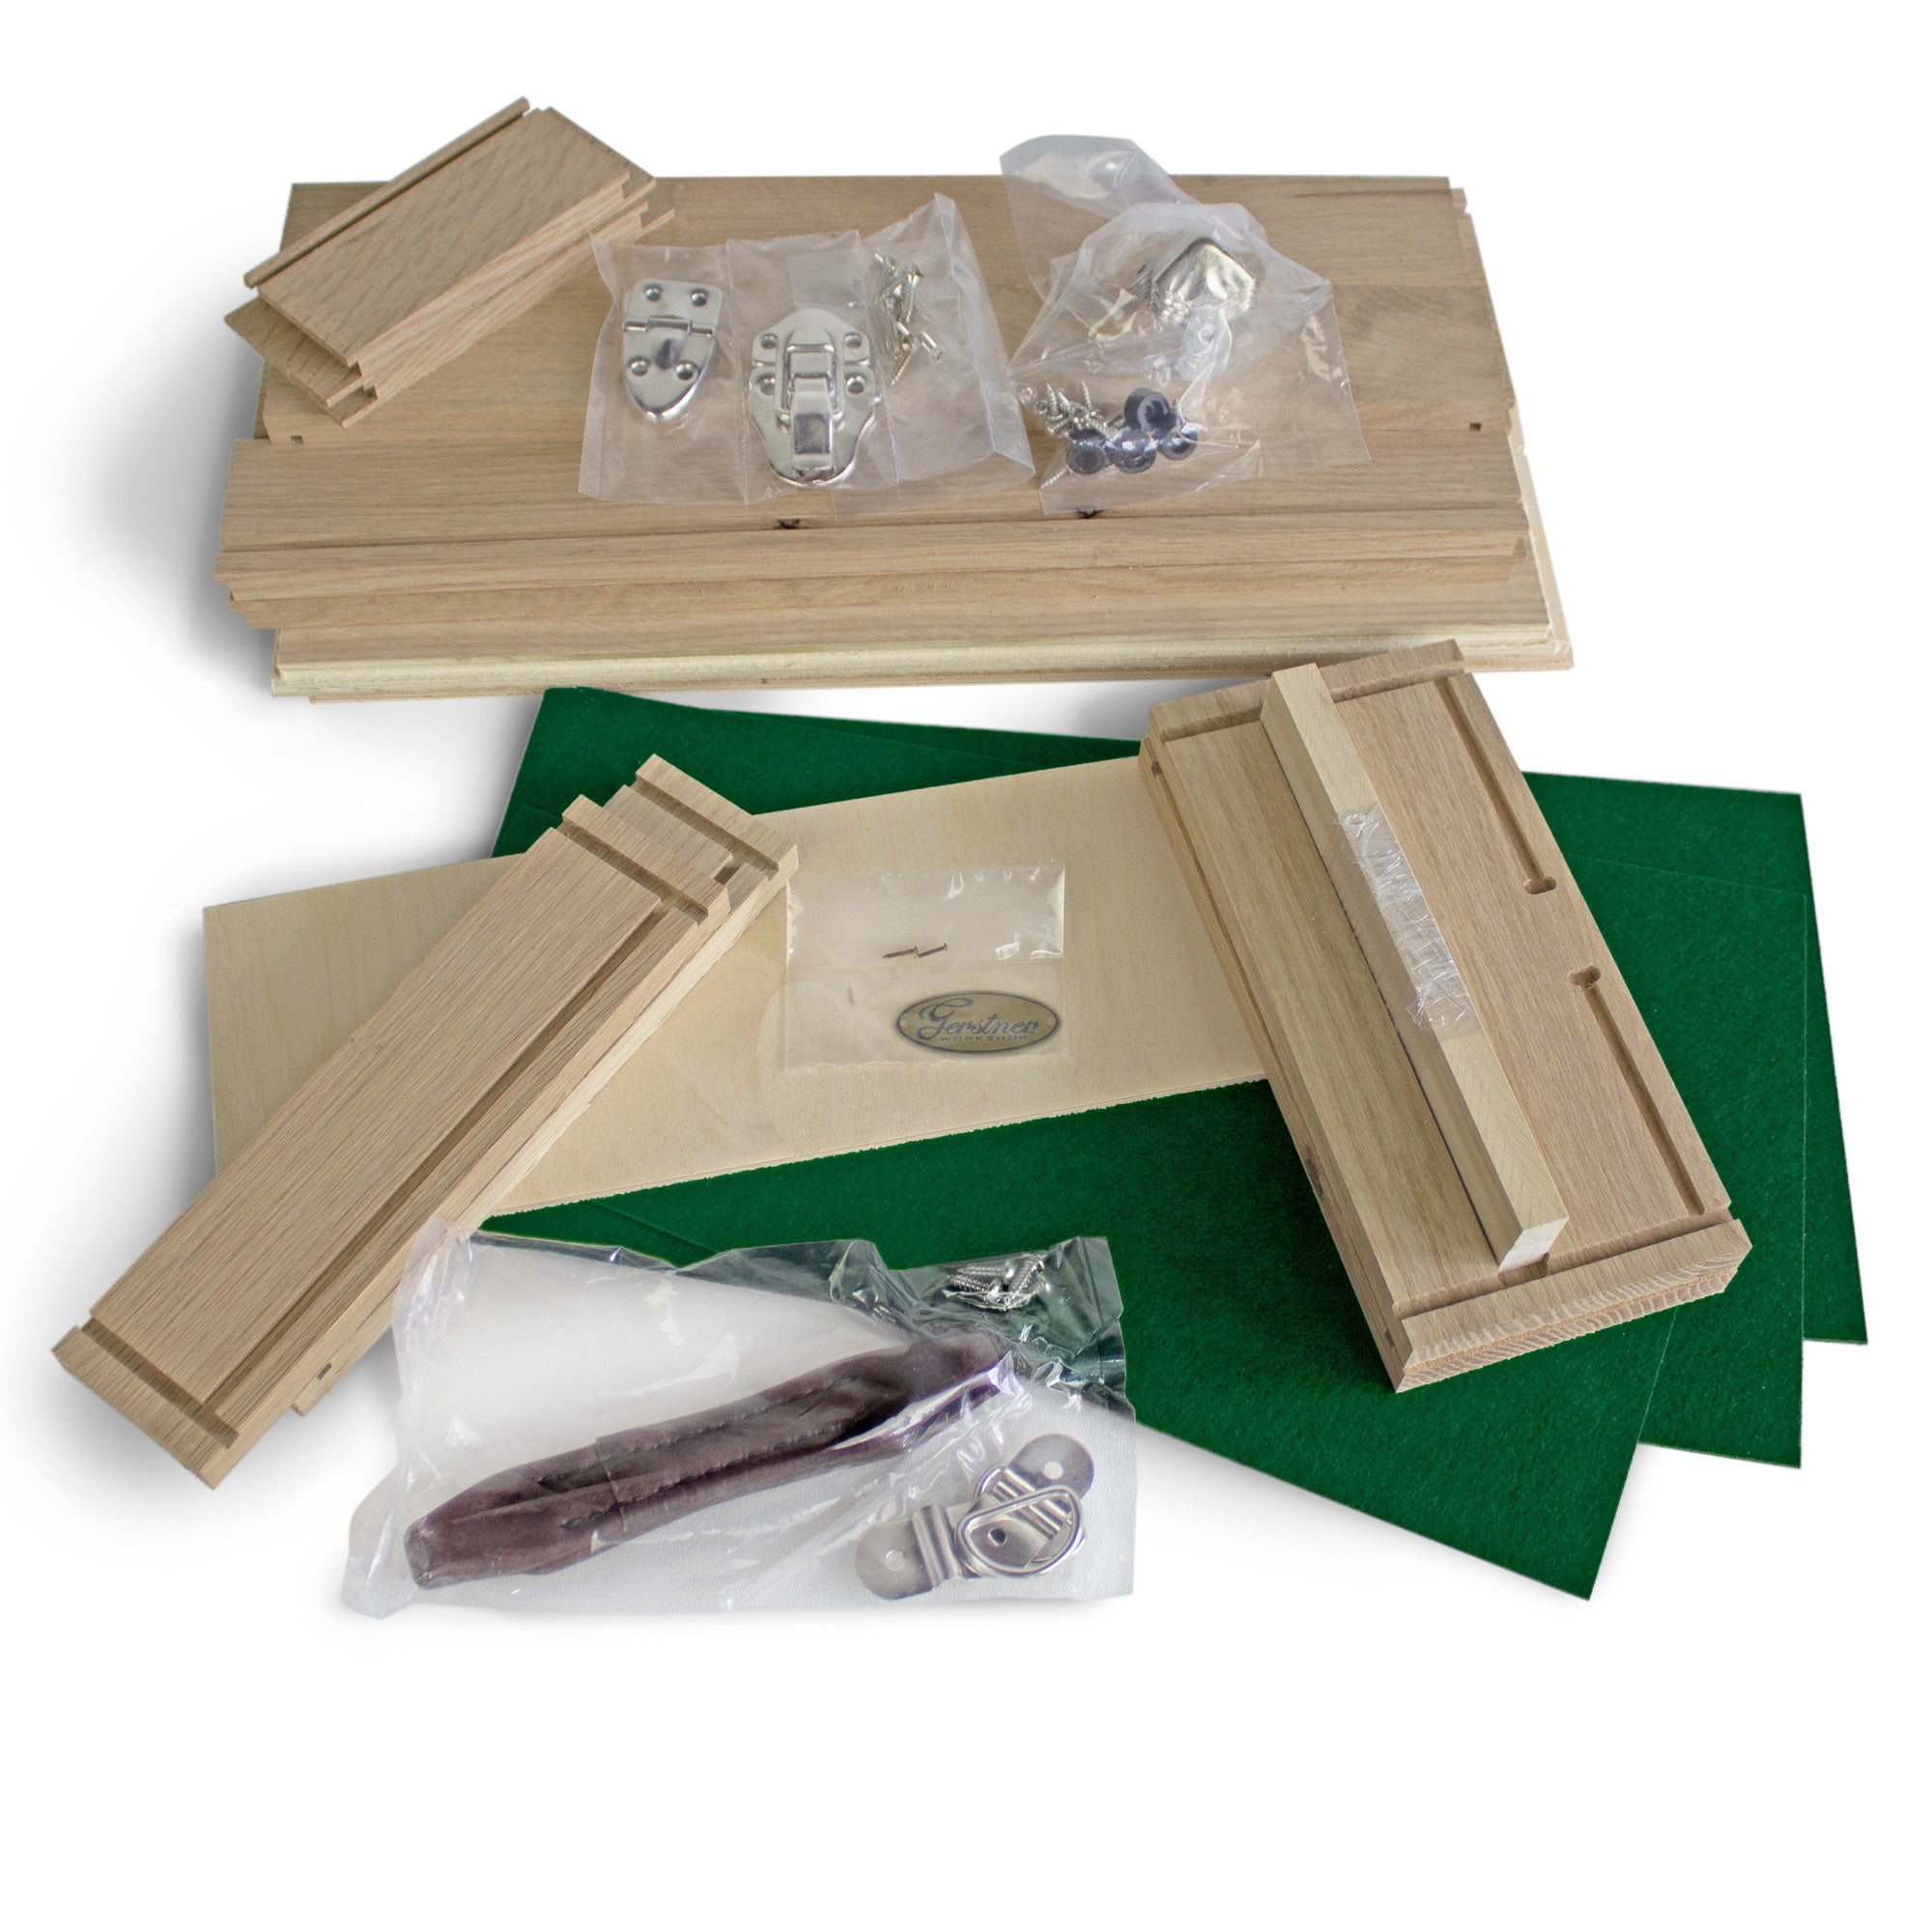 Gerstner Unfinished Wooden Tote Case DIY Kit, Green Felt - Micro - Mark Organizers